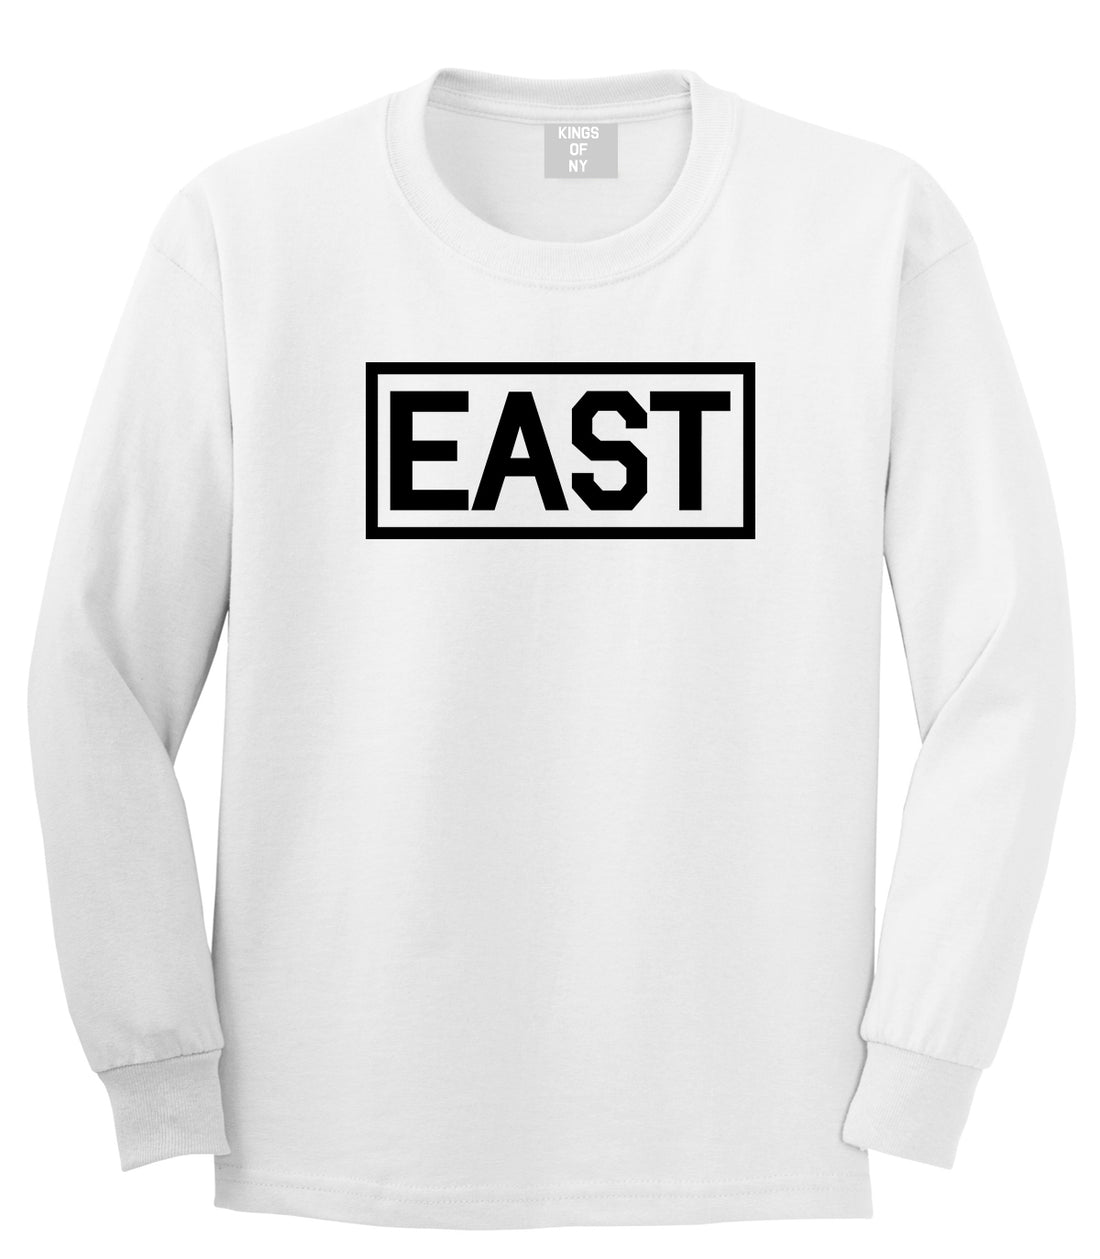 East Box Logo Mens White Long Sleeve T-Shirt by Kings Of NY